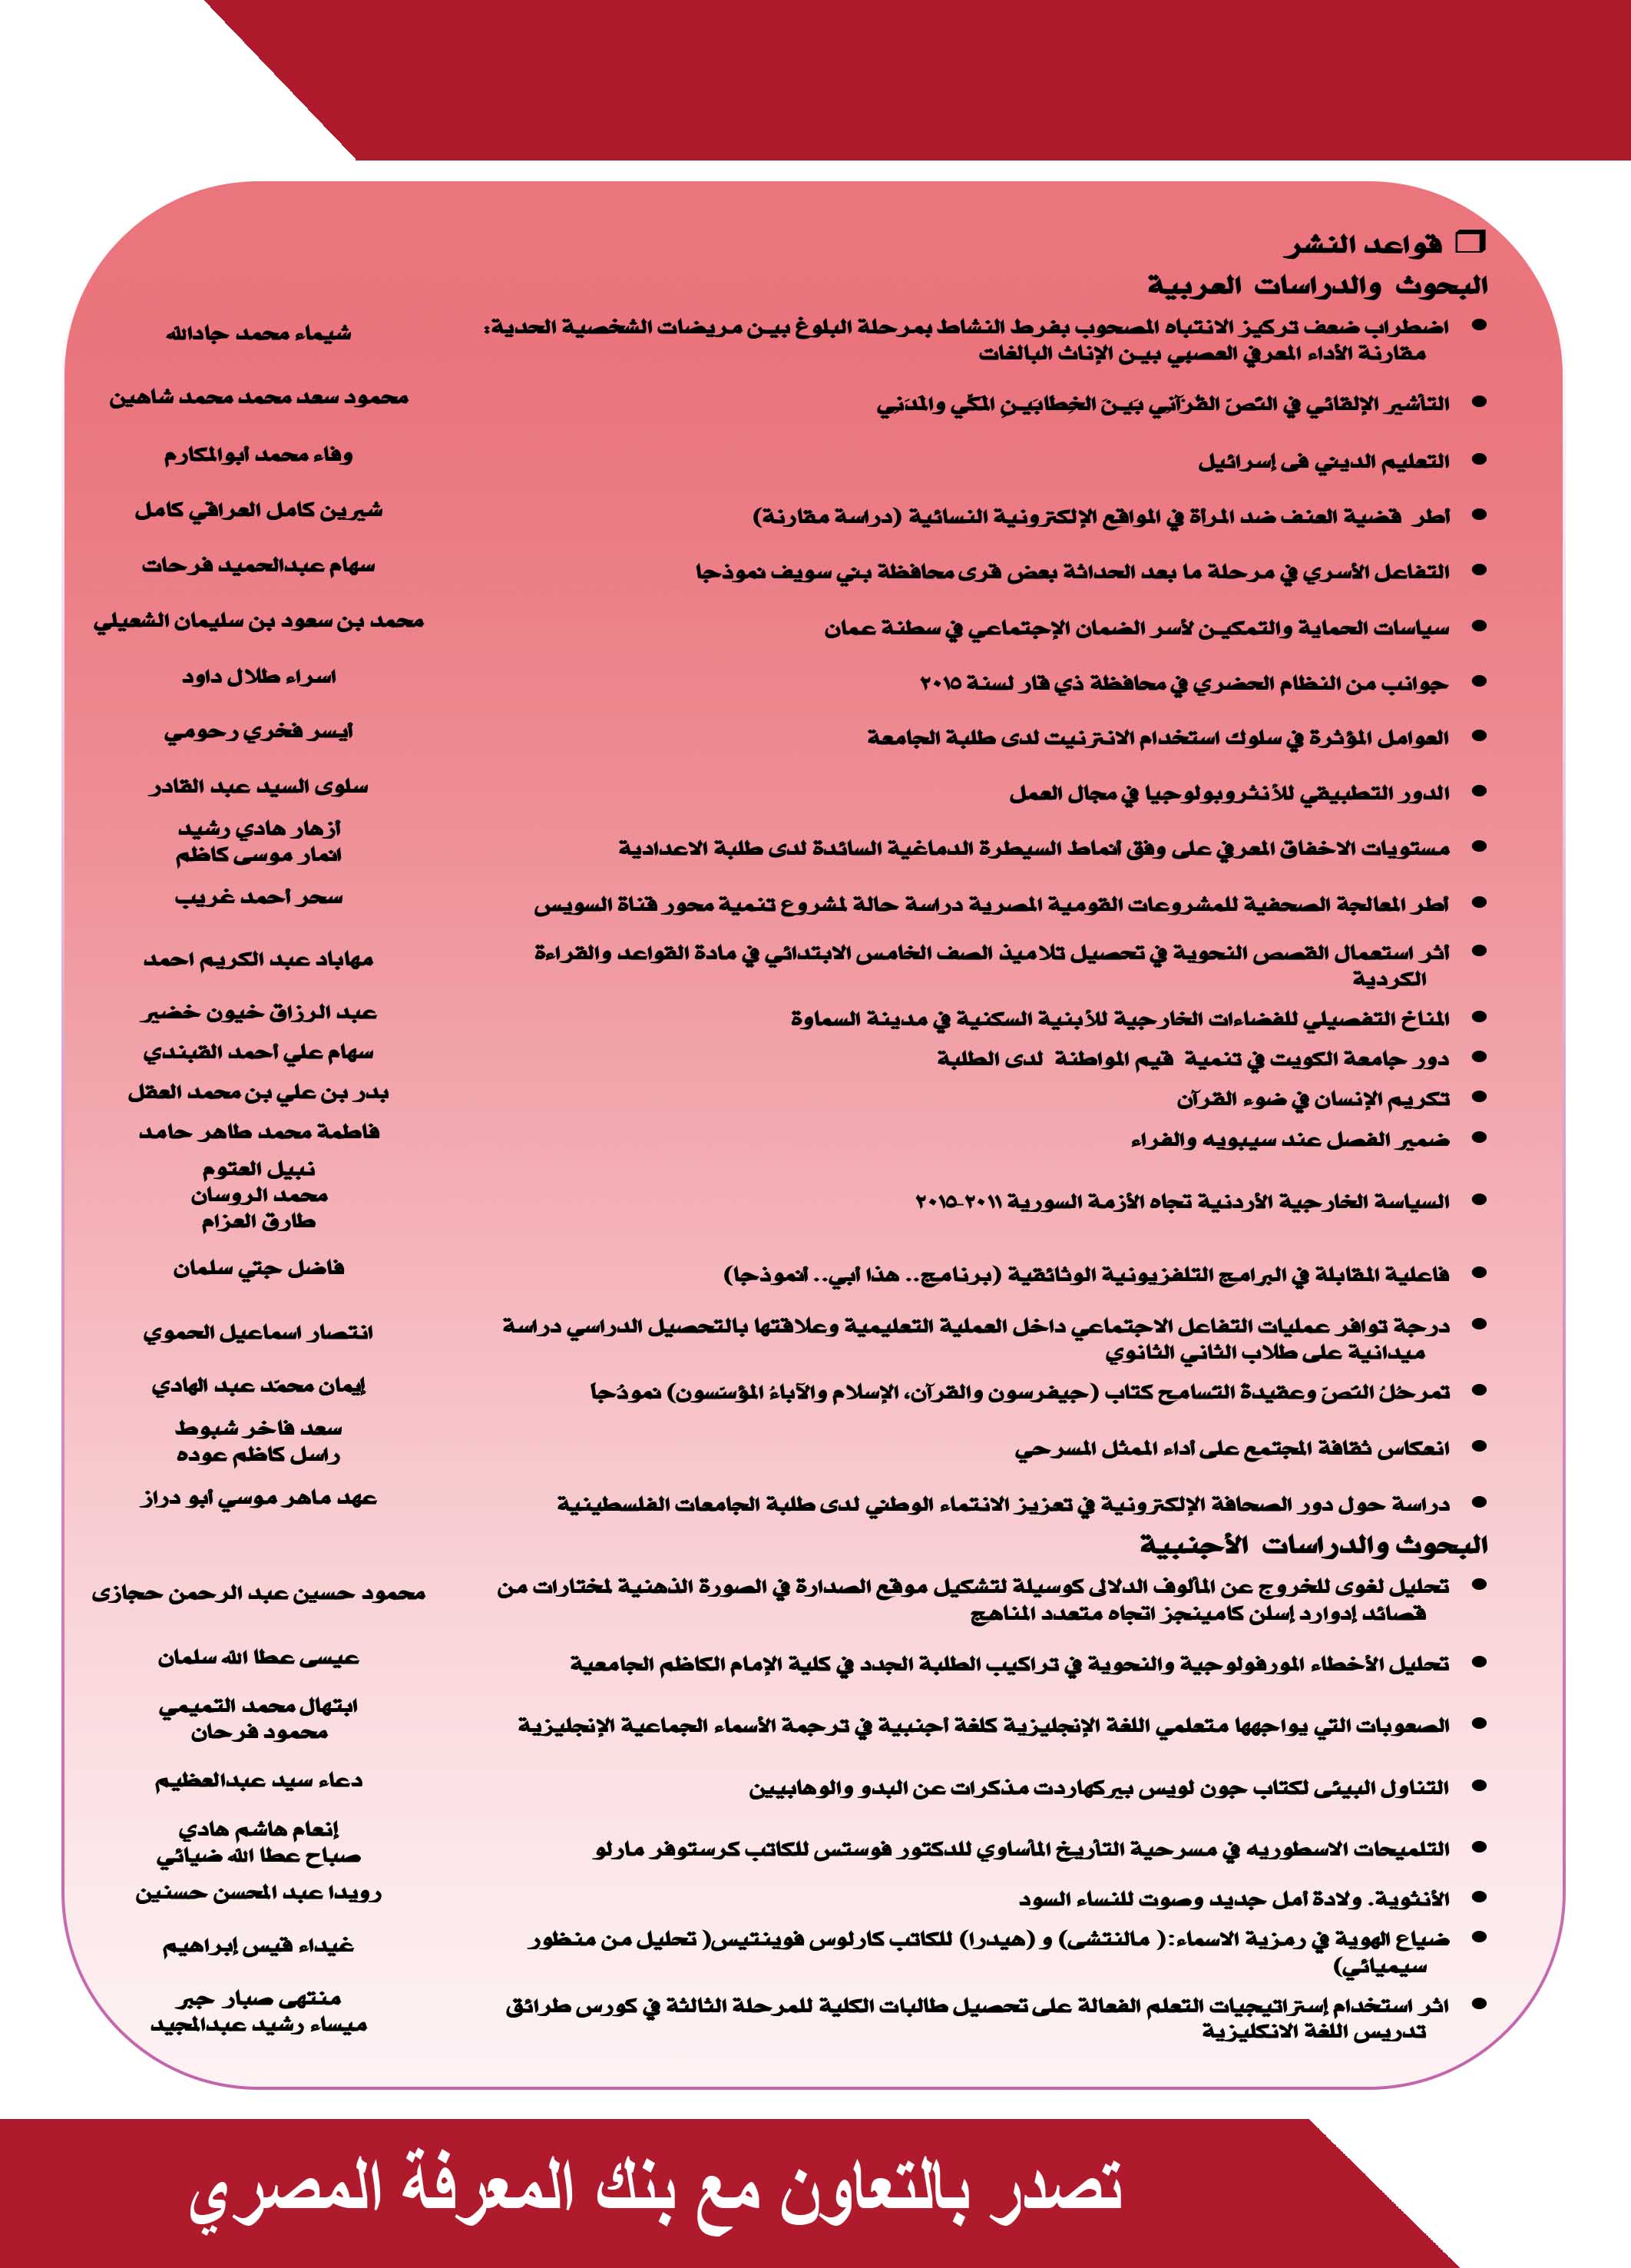 Annals of the Faculty of Arts, Ain Shams University